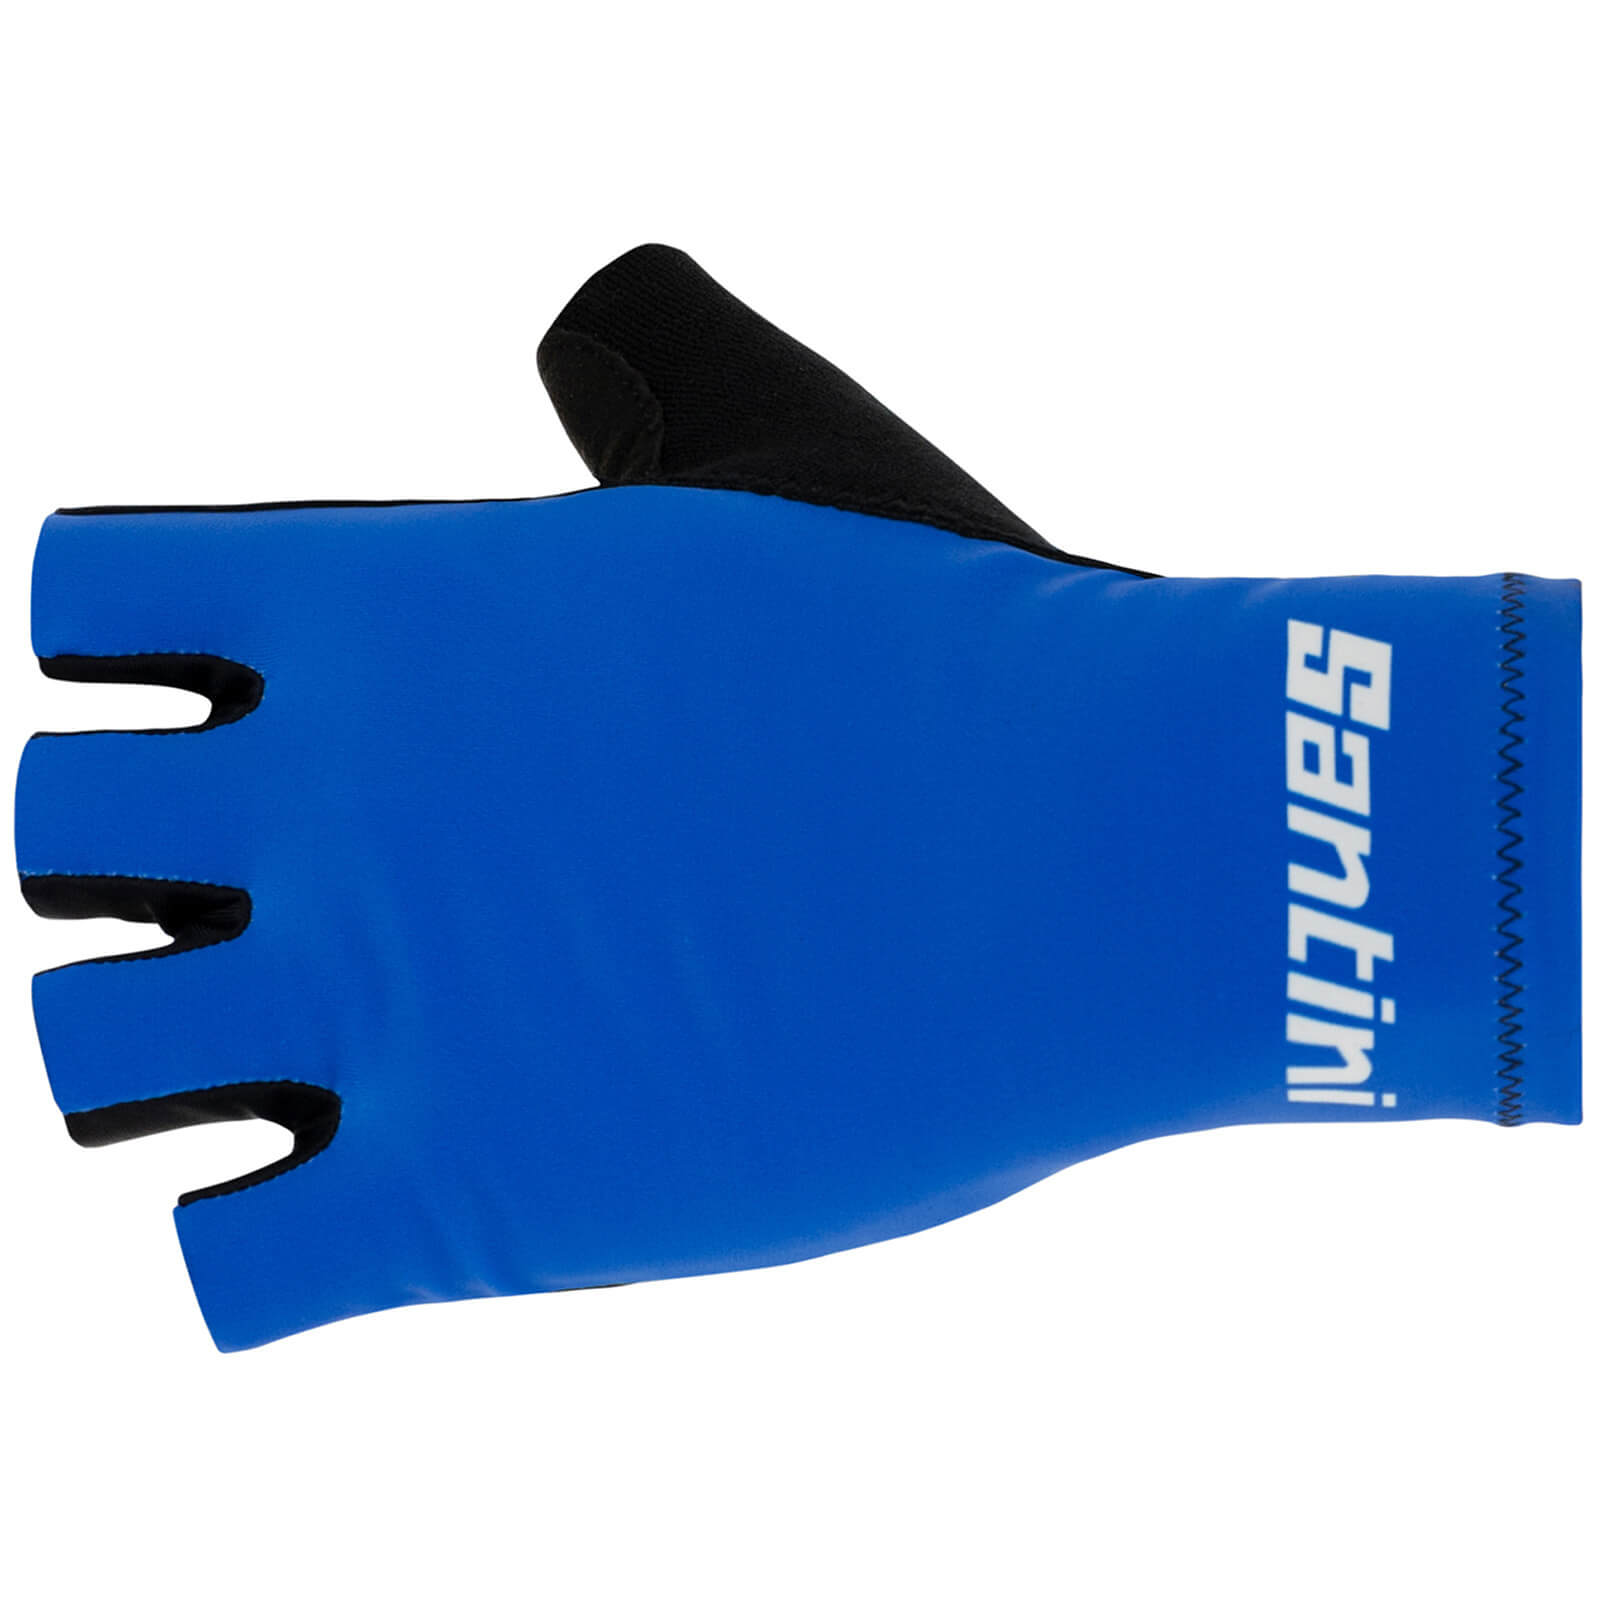 Santini Redux Istino Gloves - S - Royal blue